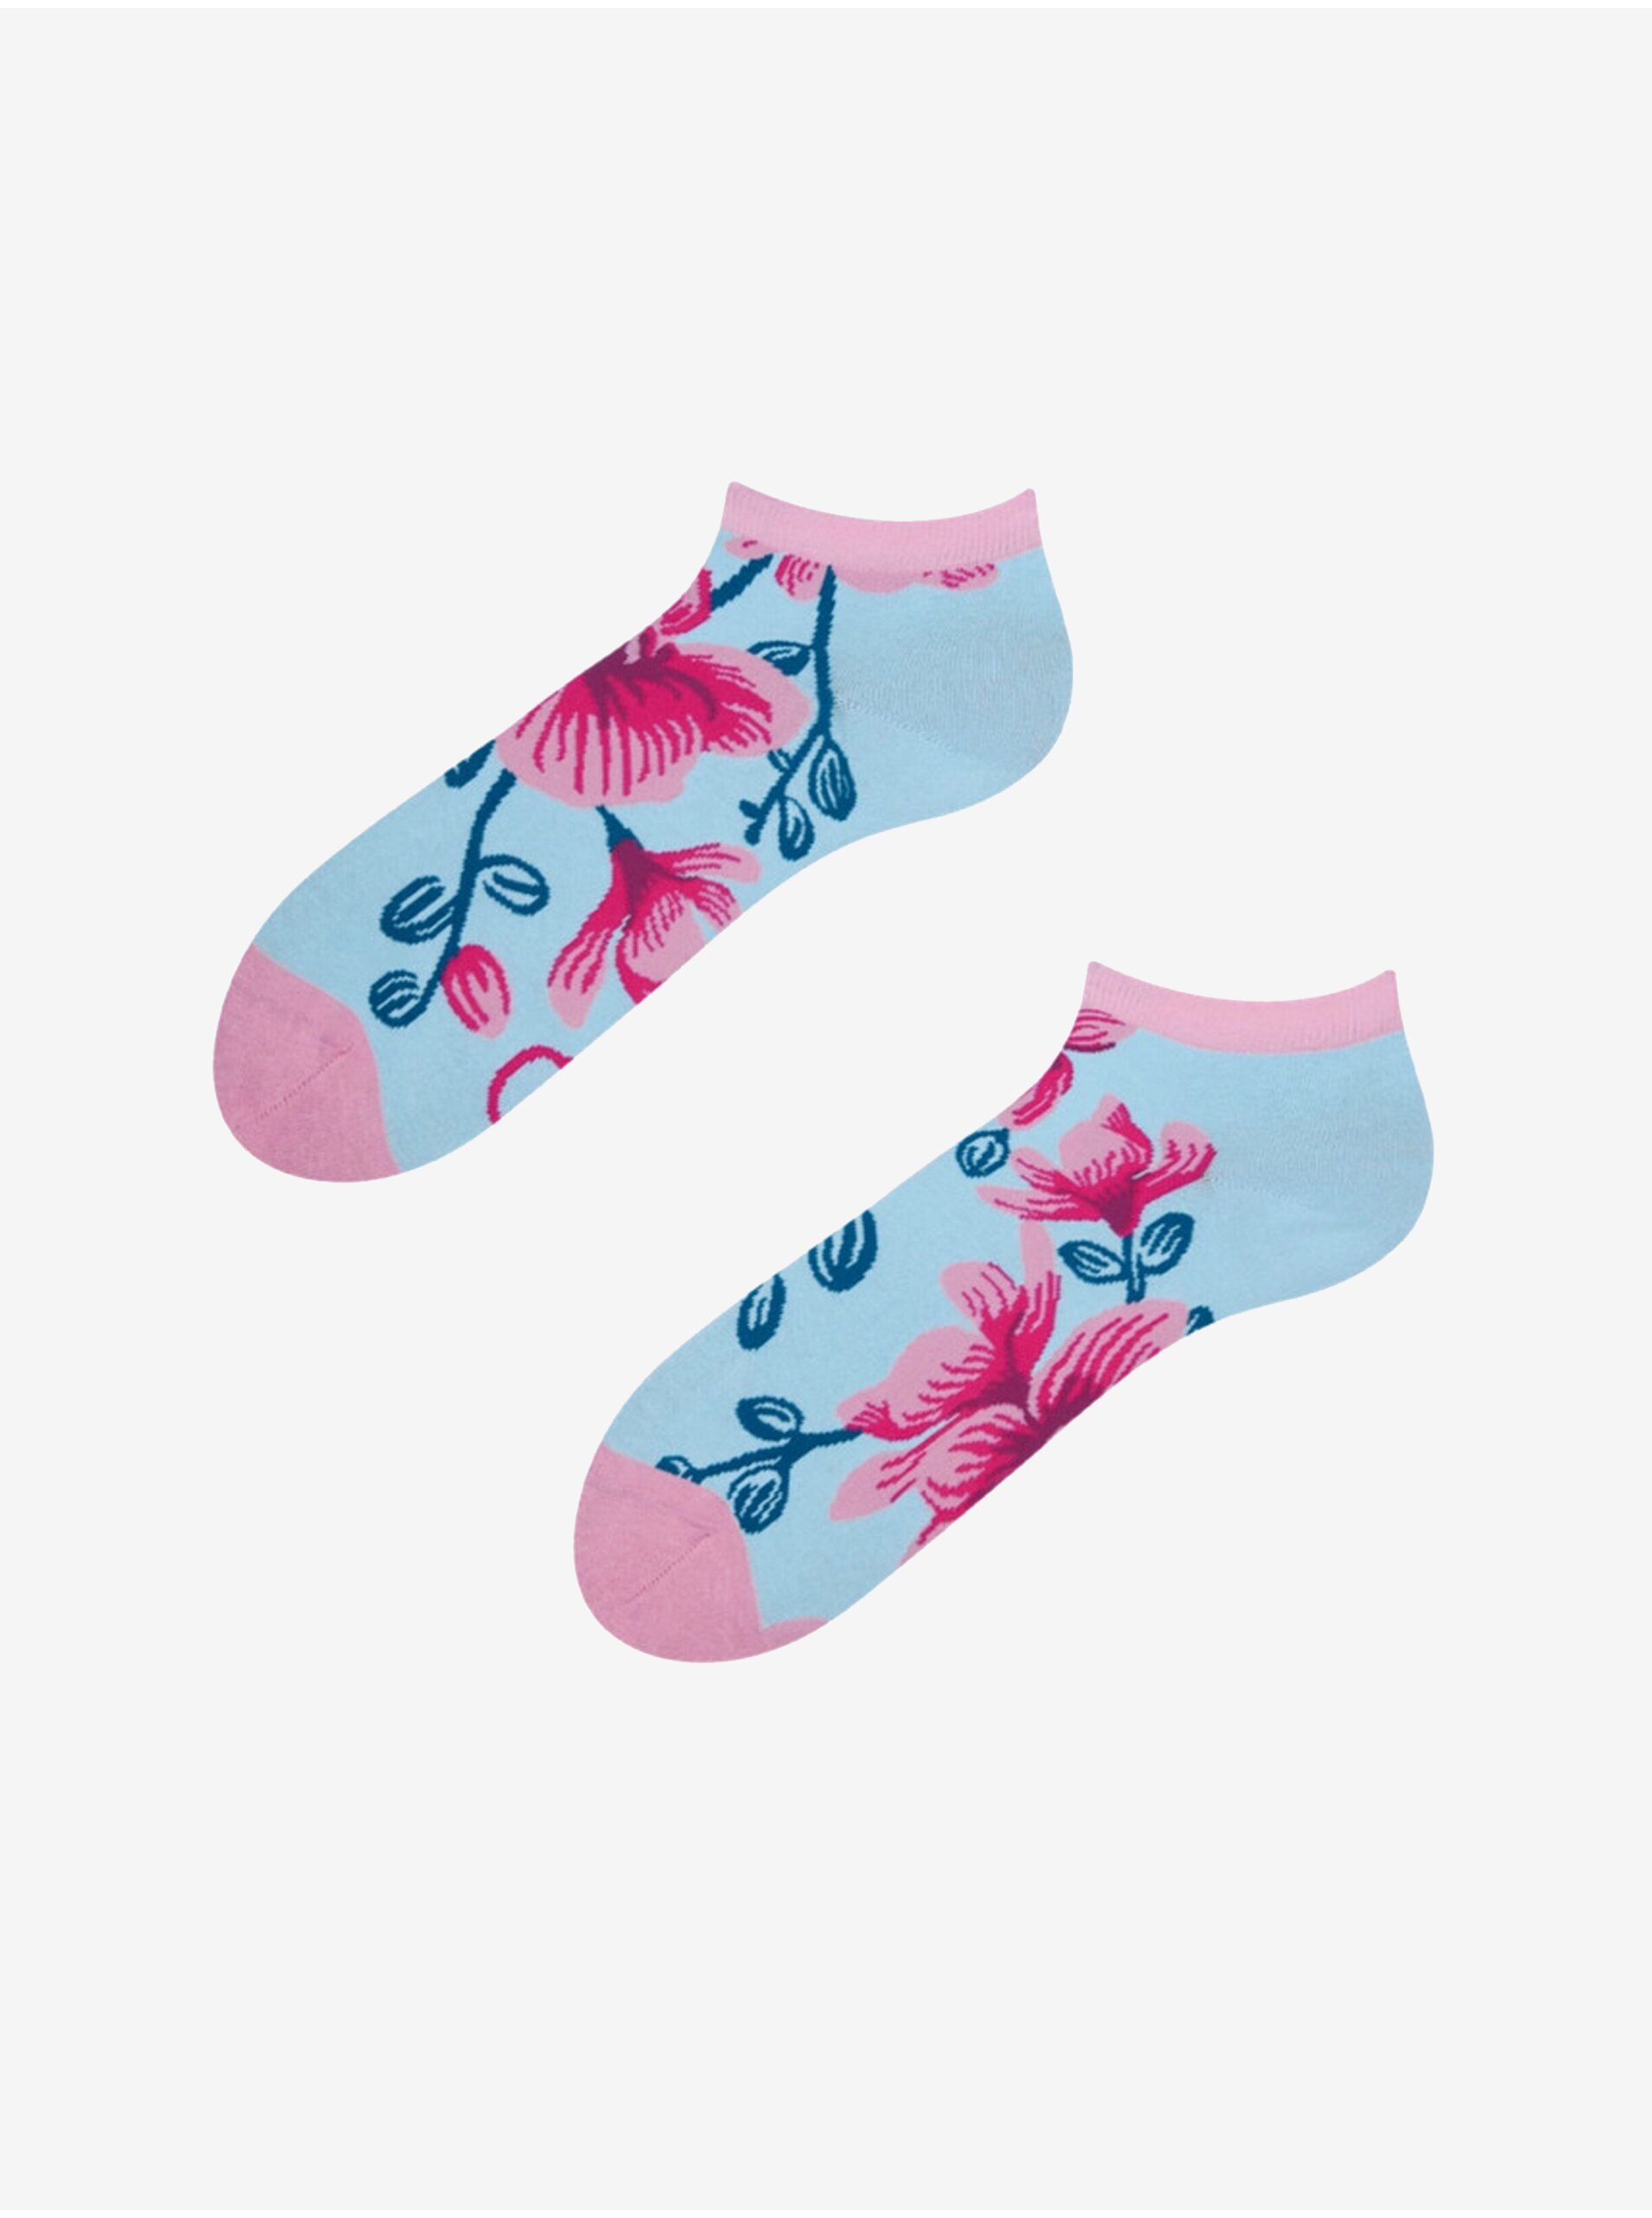 Lacno Ružovo-modré veselé ponožky Dedoles Orchidea